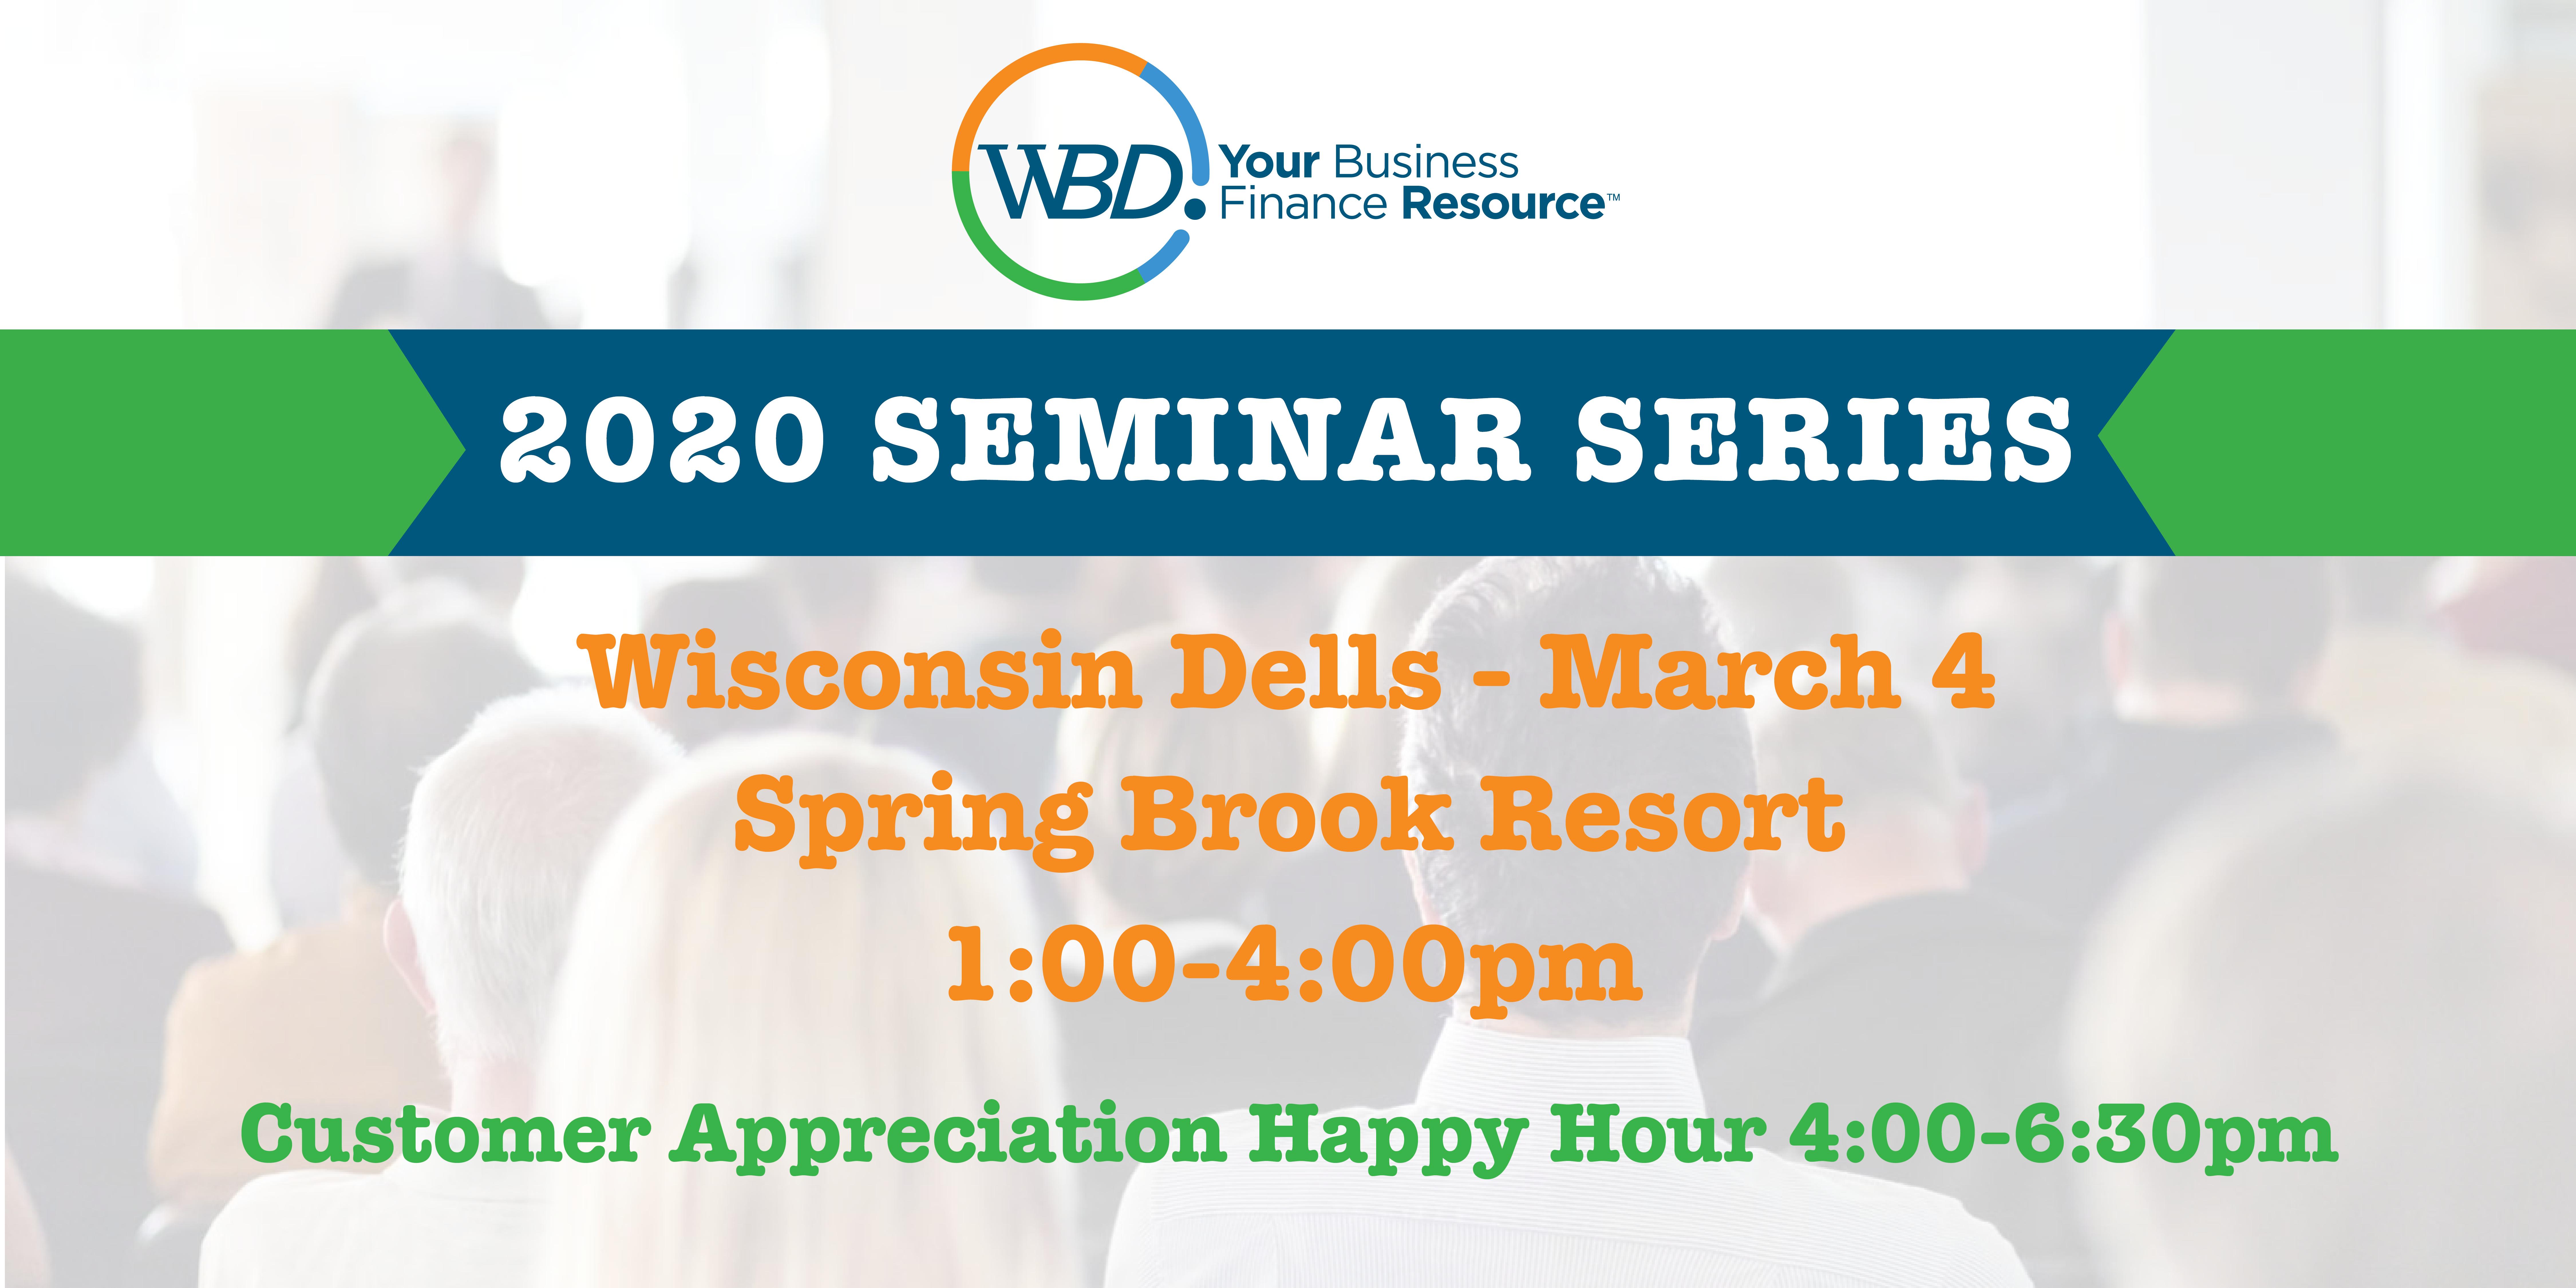 WBD 2020 Seminar Series - Wisconsin Dells